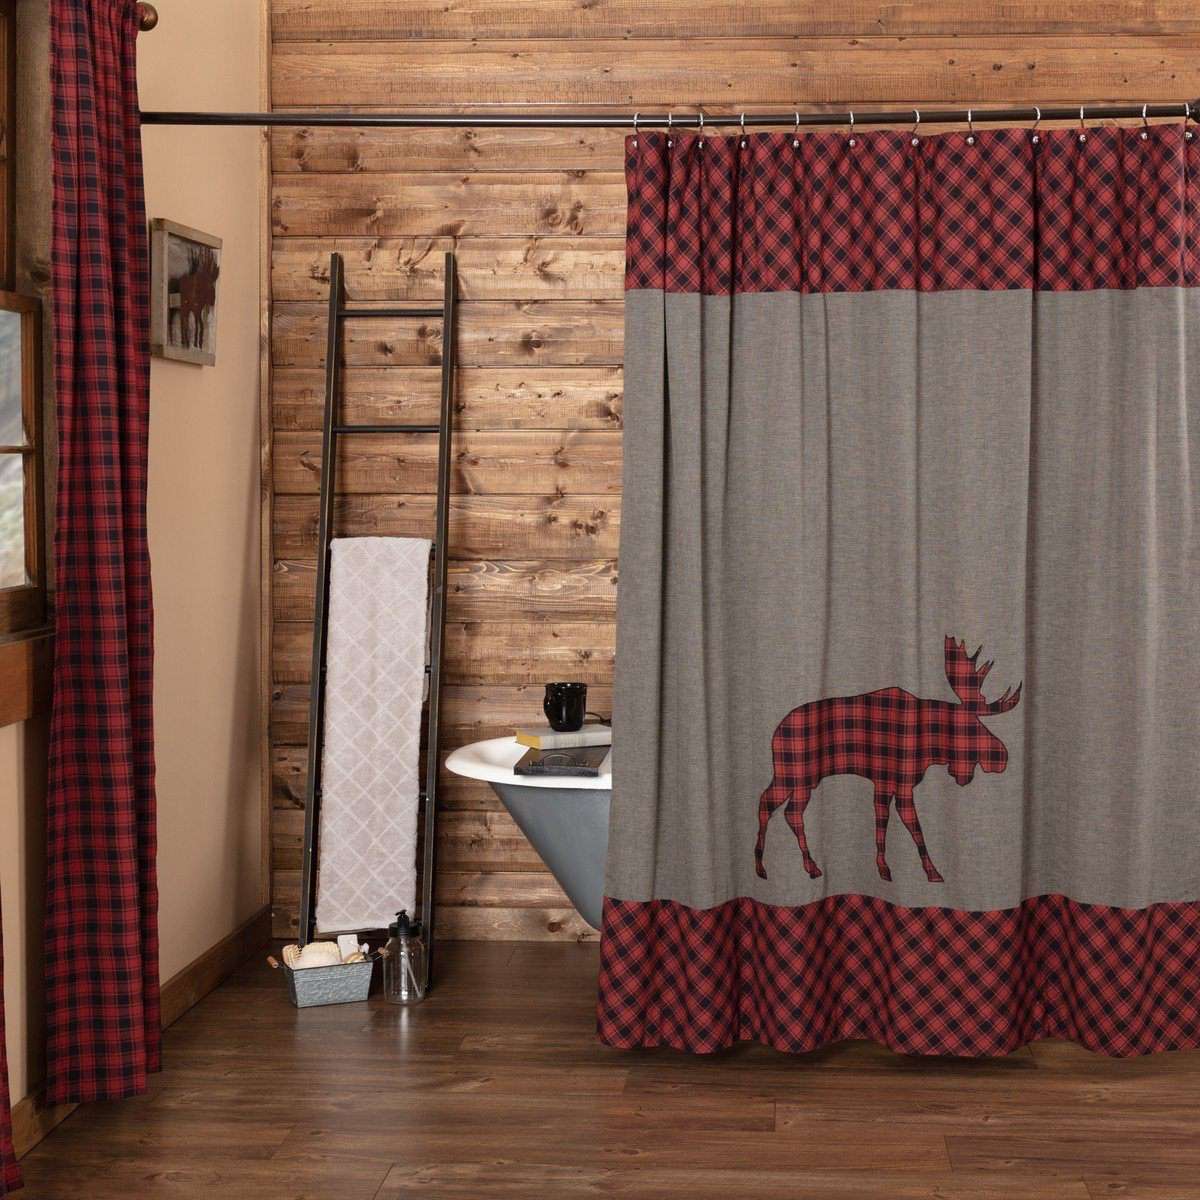 Cumberland Moose Applique Shower Curtain 72"x72" curtain VHC Brands 